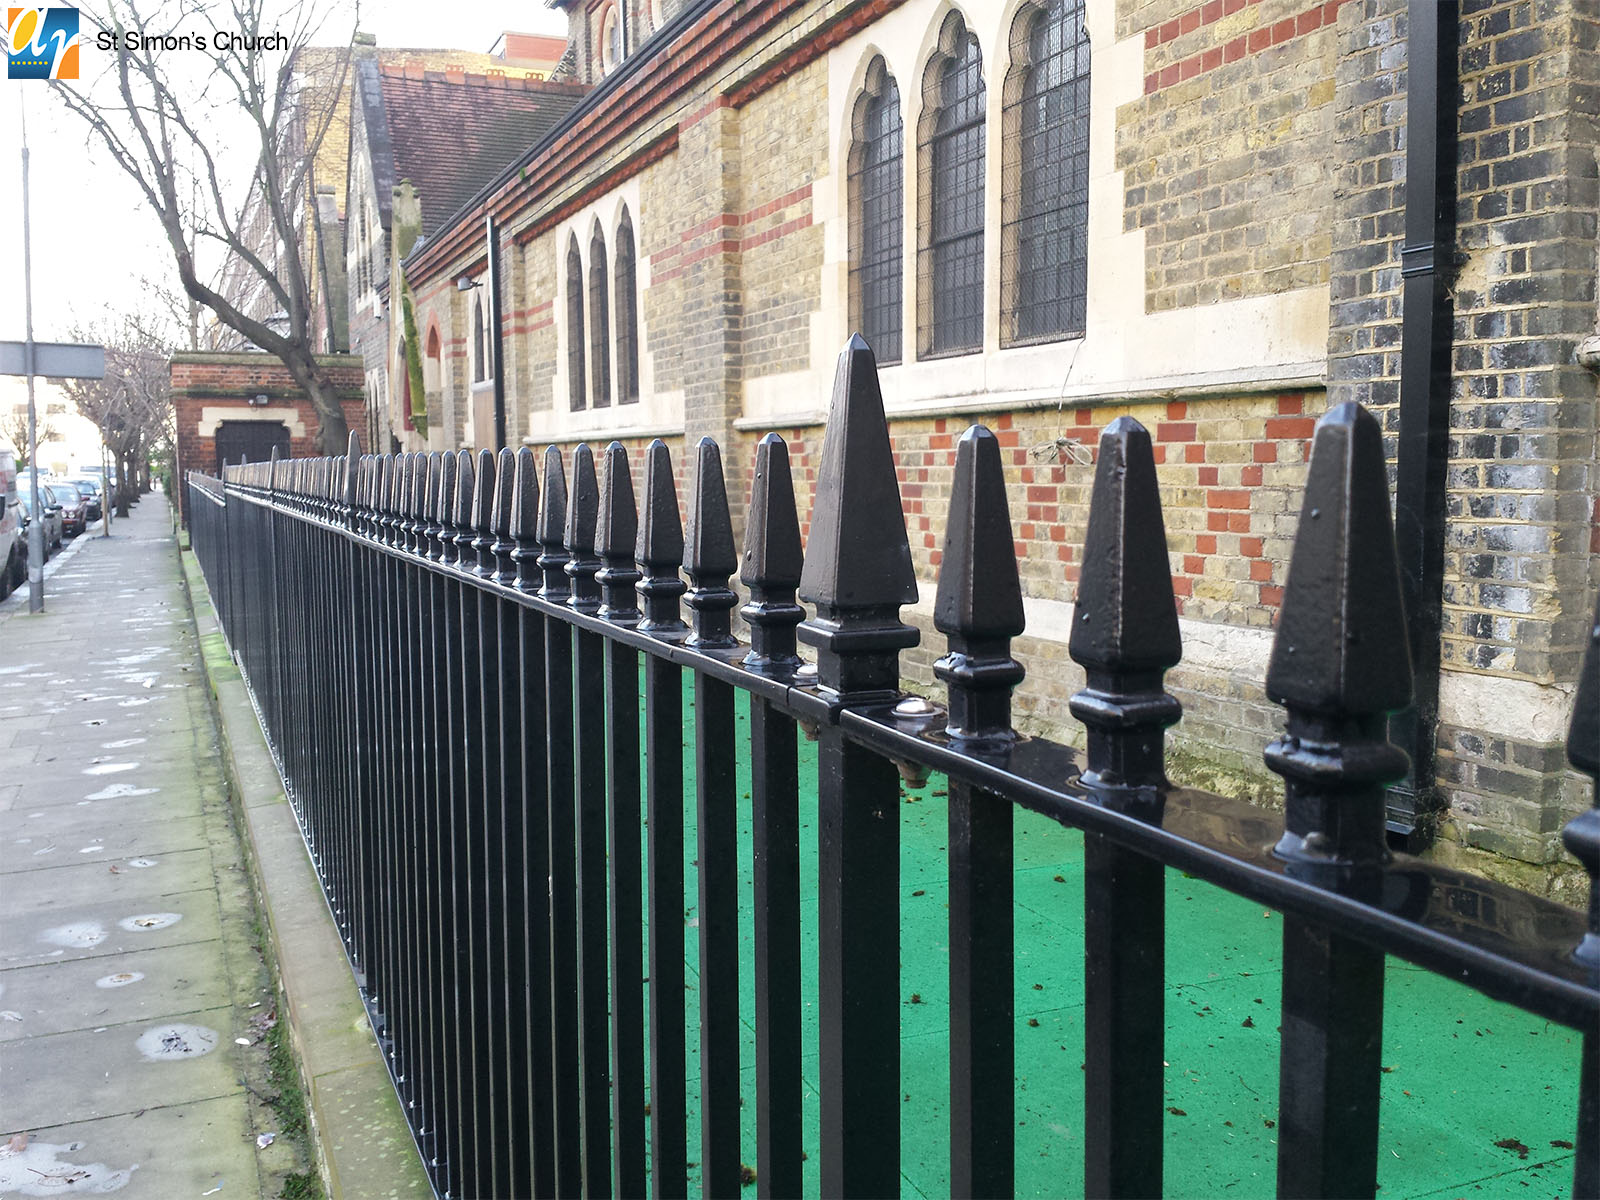 St. Simon's Church Kennington metal railings